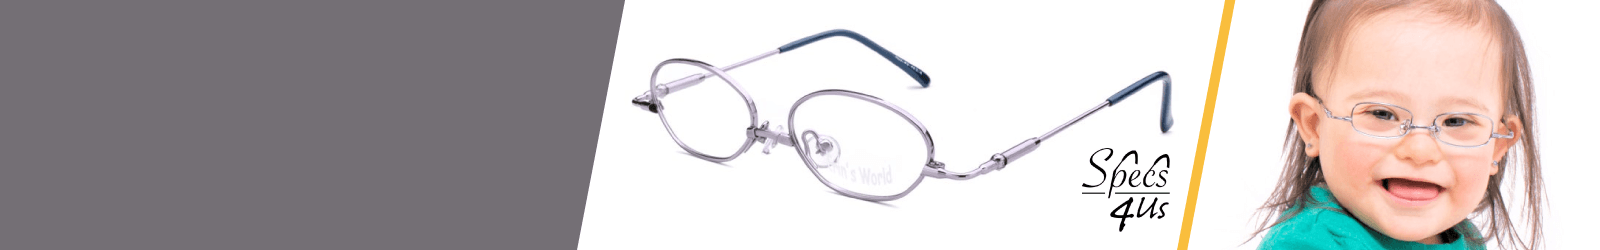 White Specs4us Eyeglasses Accessories for Kids